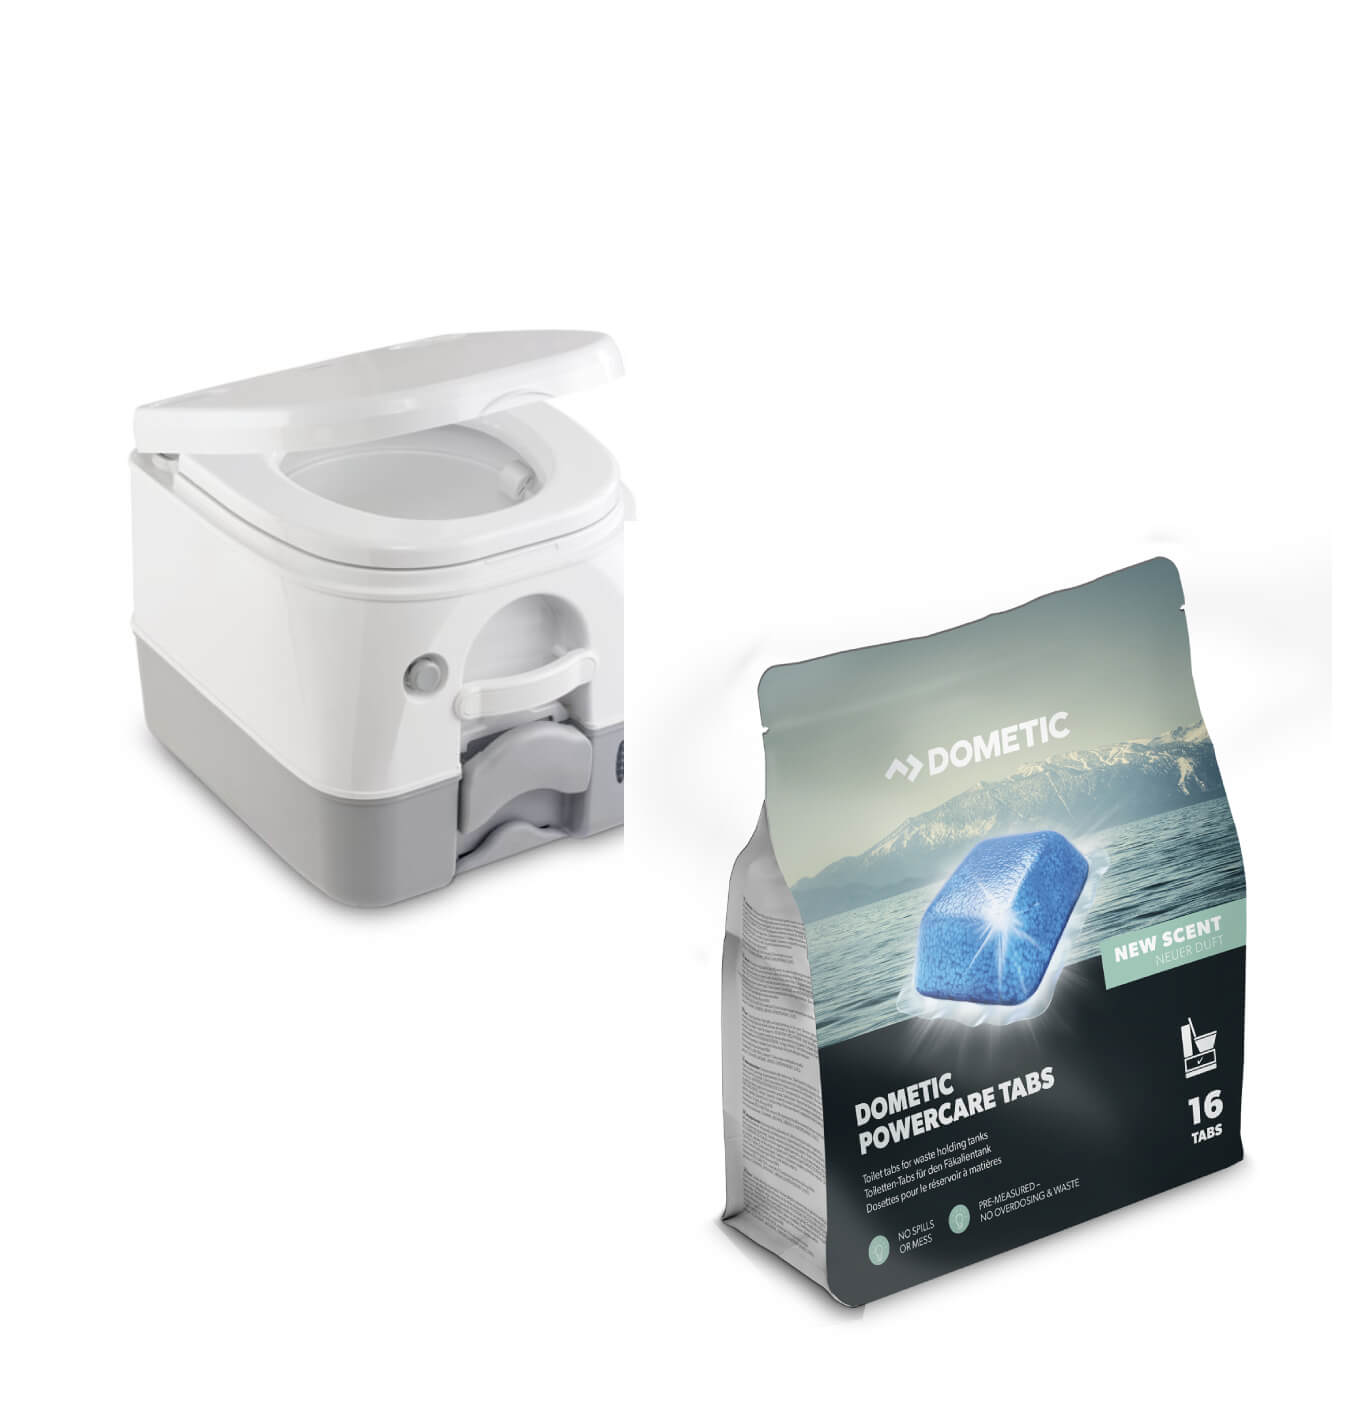 Dometic 972G Portable Toilet & PowerCare Tabs Bundle Image